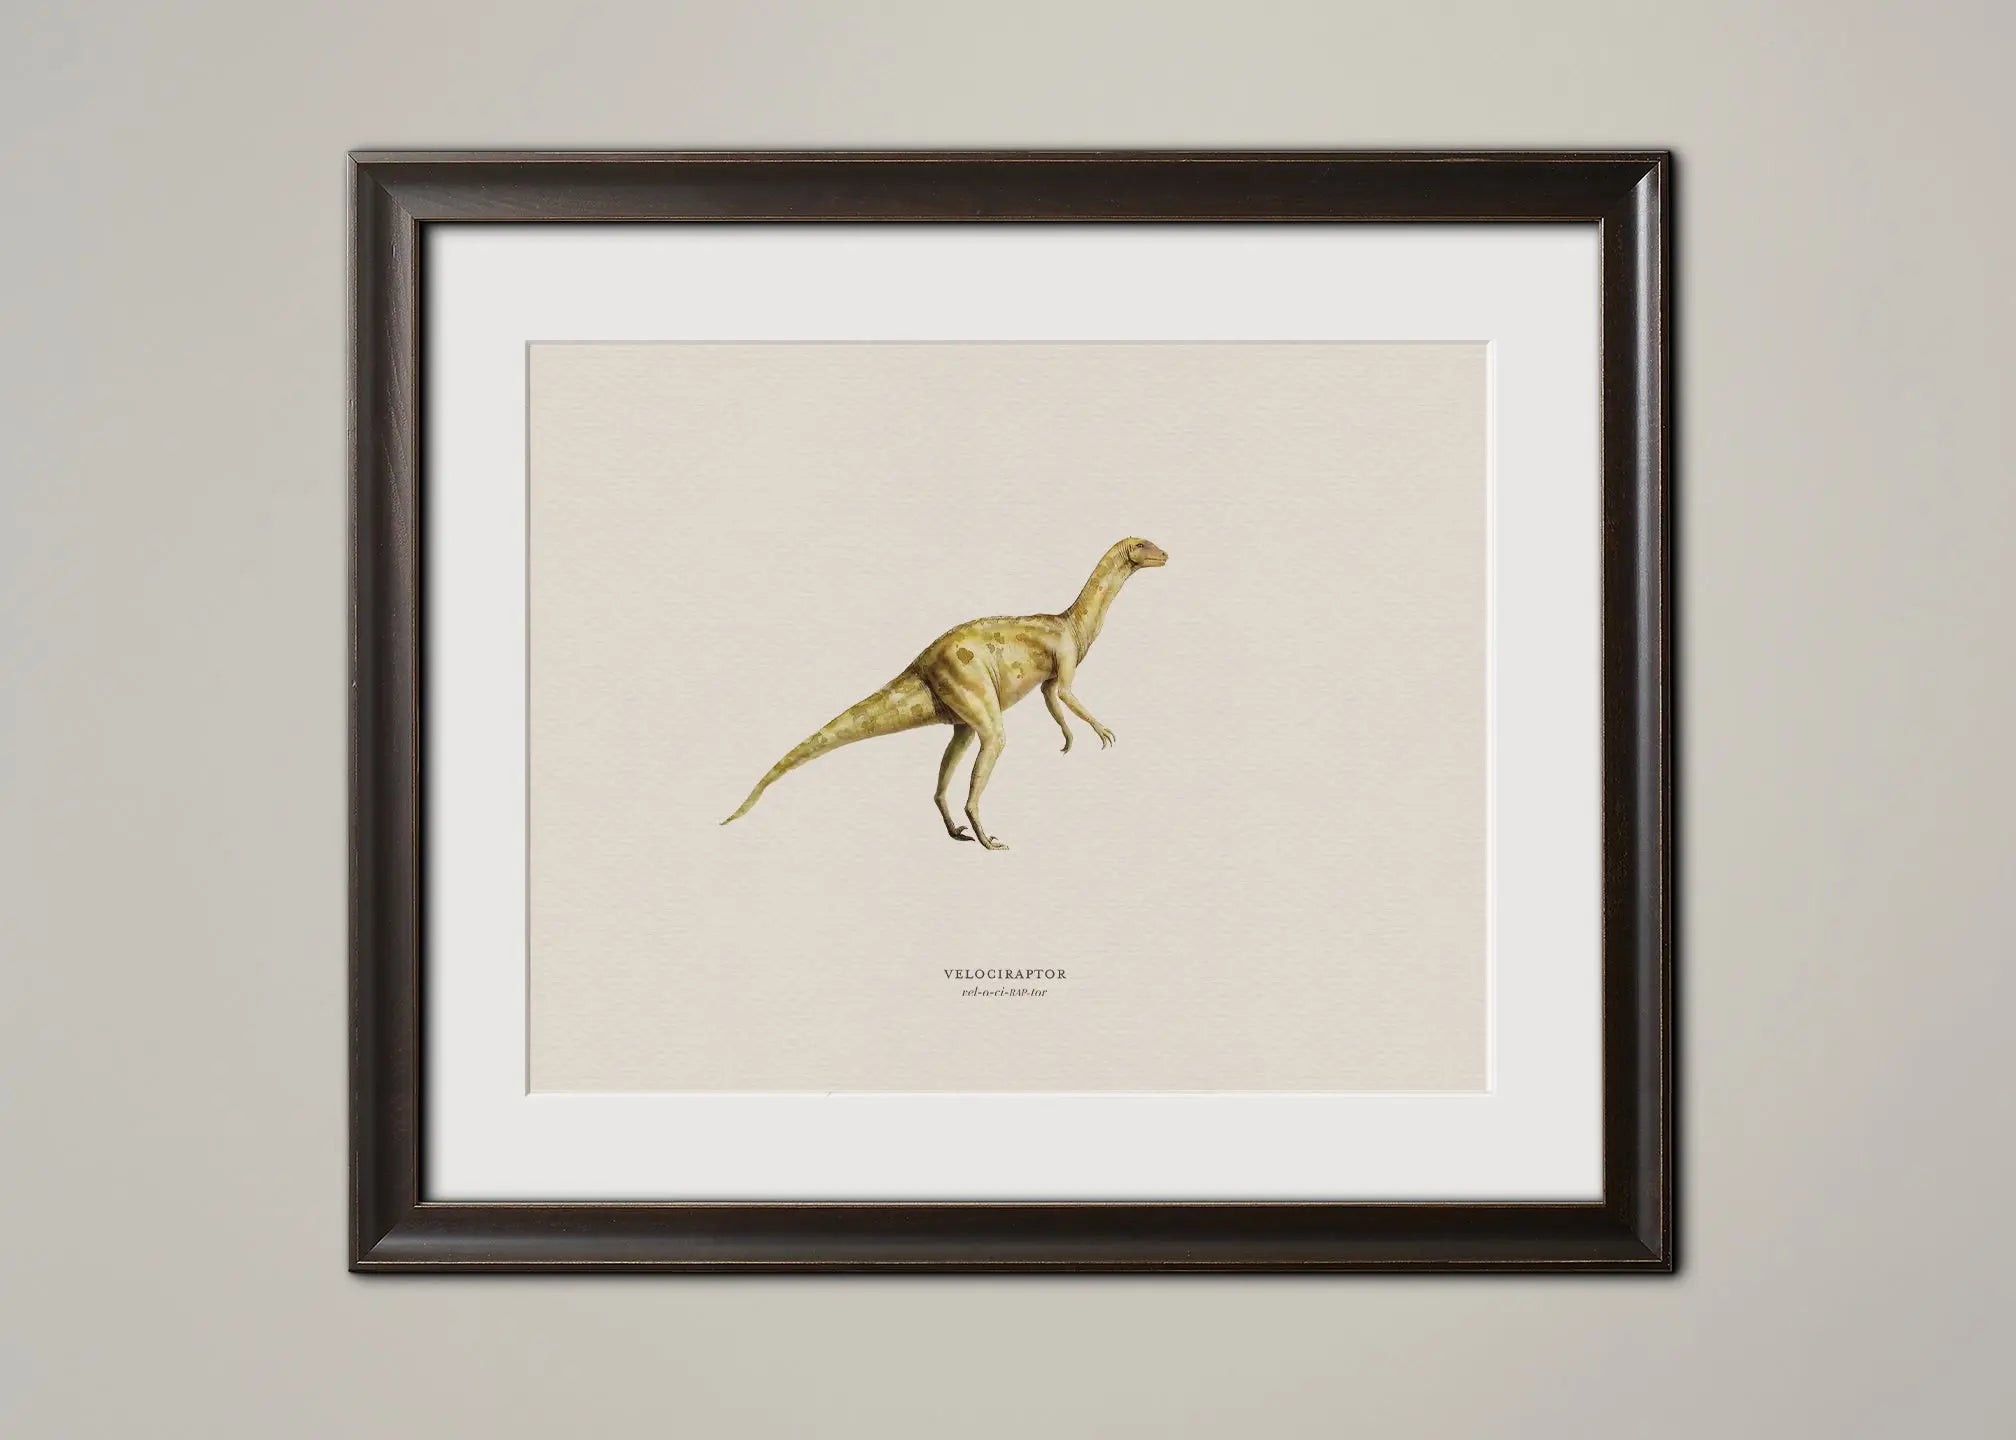 Vintage Illustrations: Dinosaurs - Emblem Atelier